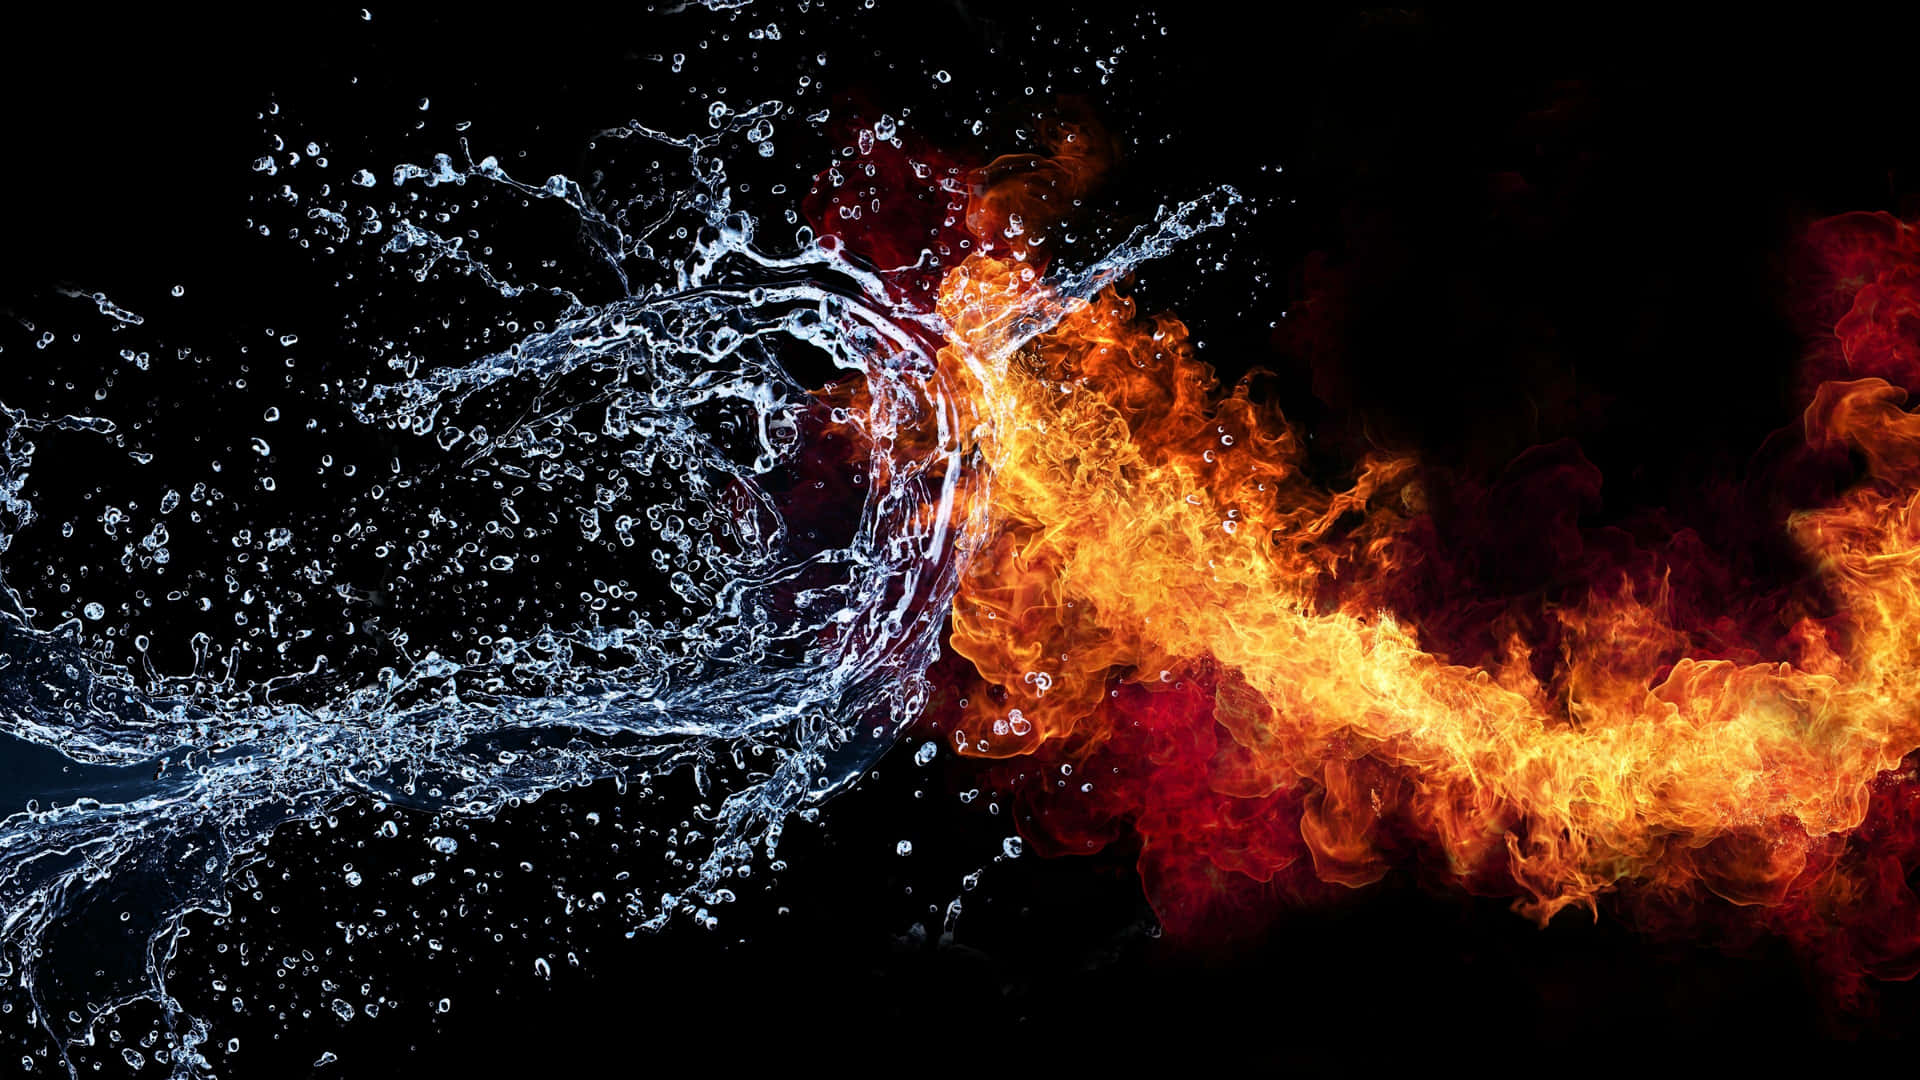 Modsætningselementer, ild og vand, sammen i balance. Wallpaper